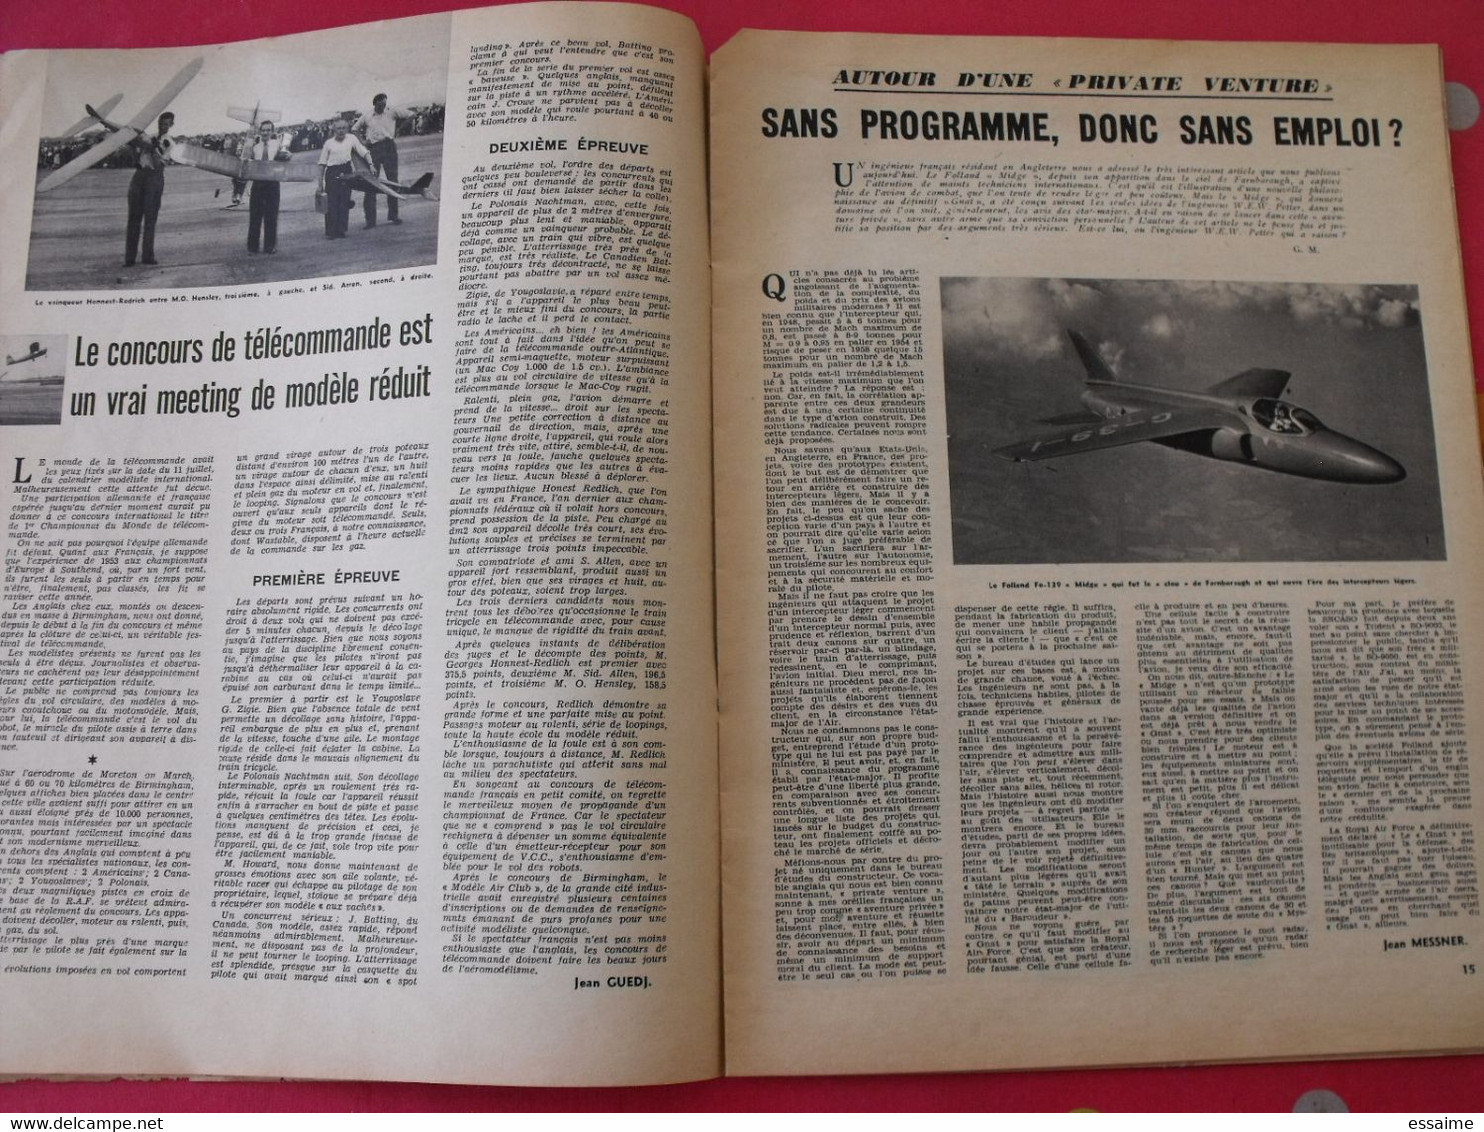 revue Aviation magazine n° 110 du 15 novembre 1954. nombreuses photos. dassault ouragan cessna paras lockheed